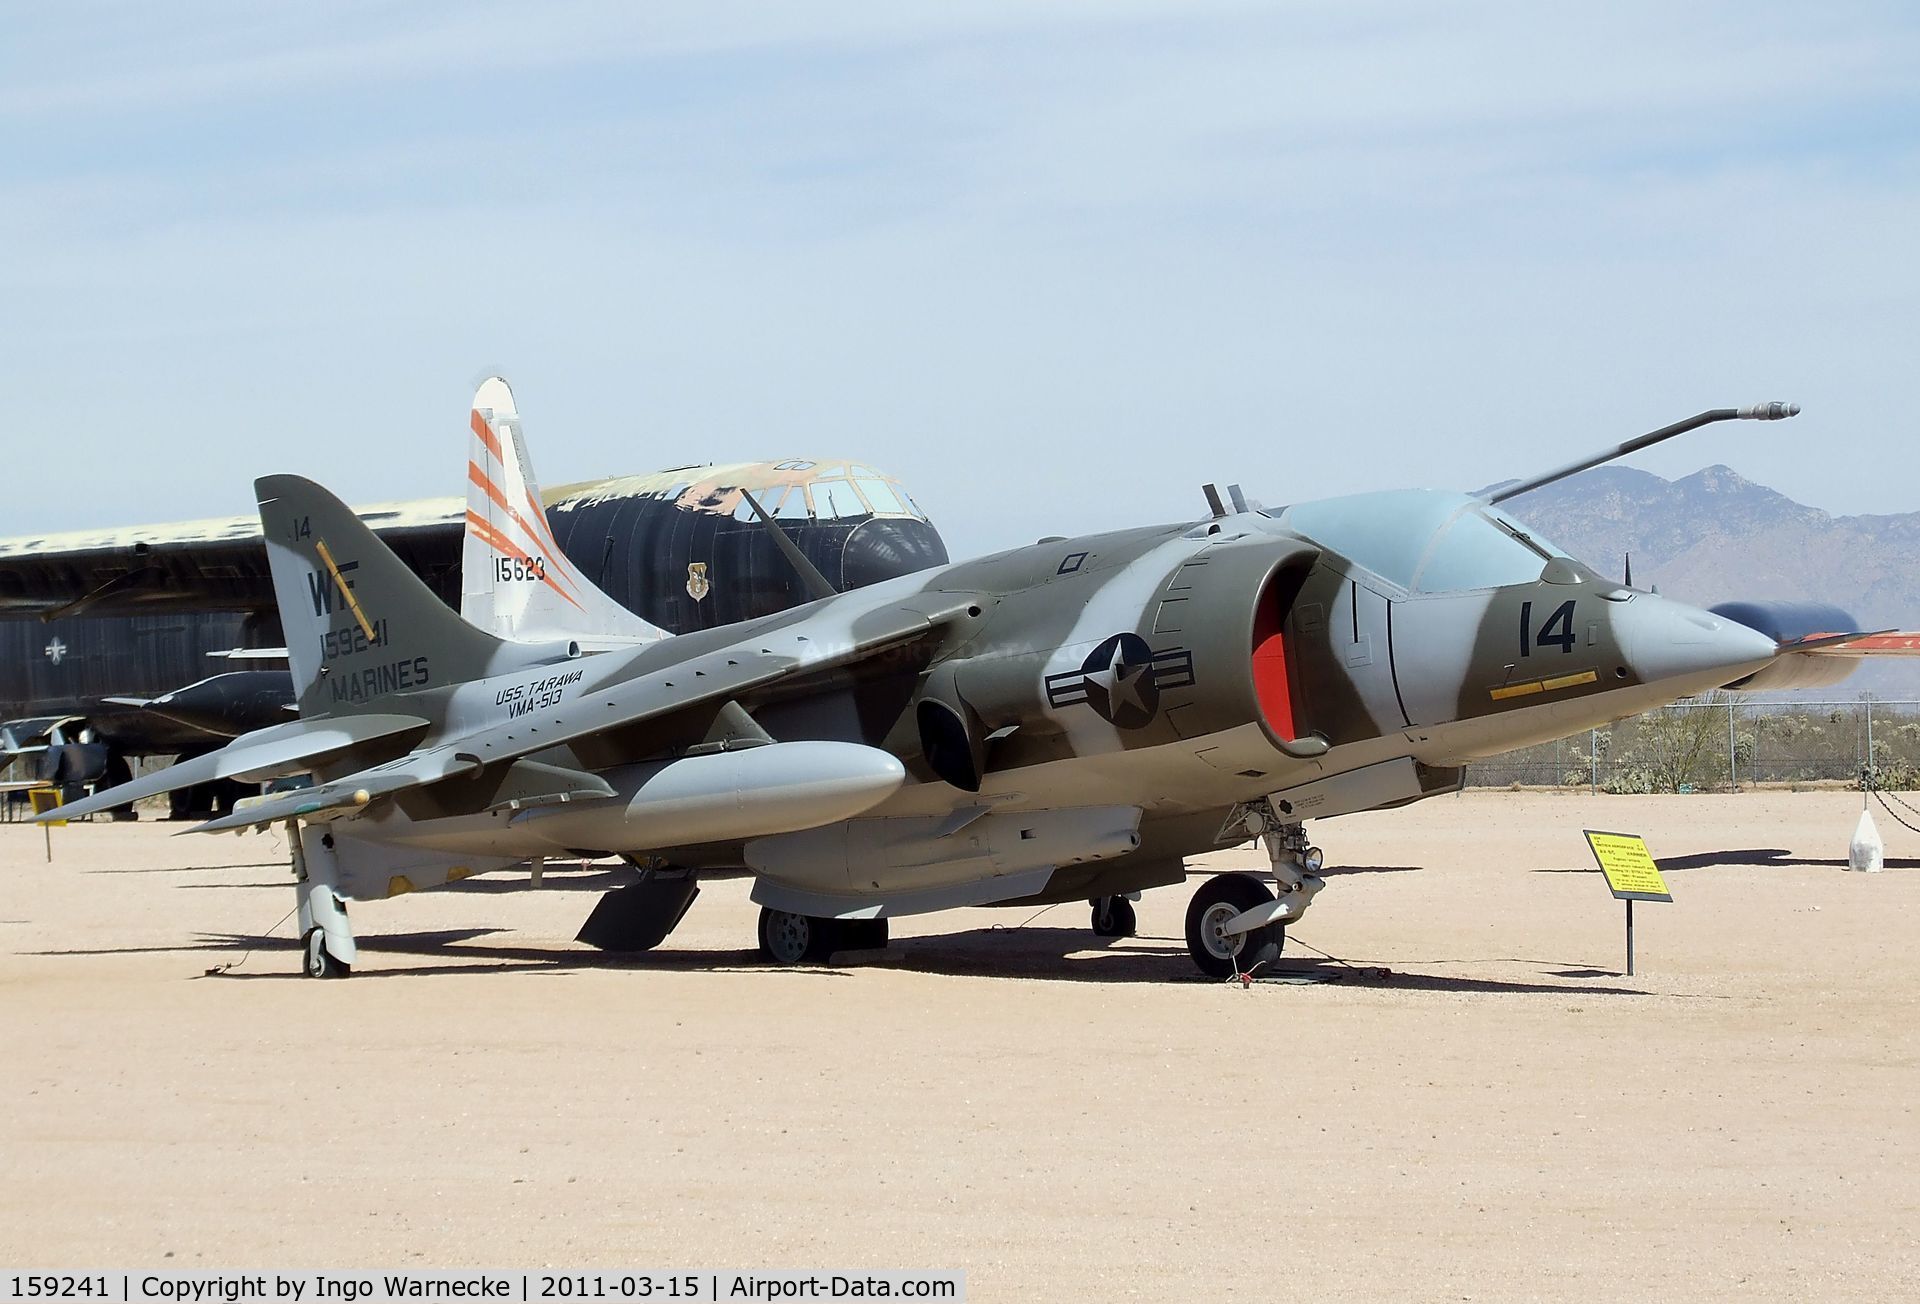 159241, Hawker Siddeley AV-8A Harrier C/N 712172, Hawker Siddleley AV-8A Harrier (upgraded to AV-8C) at the Pima Air & Space Museum, Tucson AZ